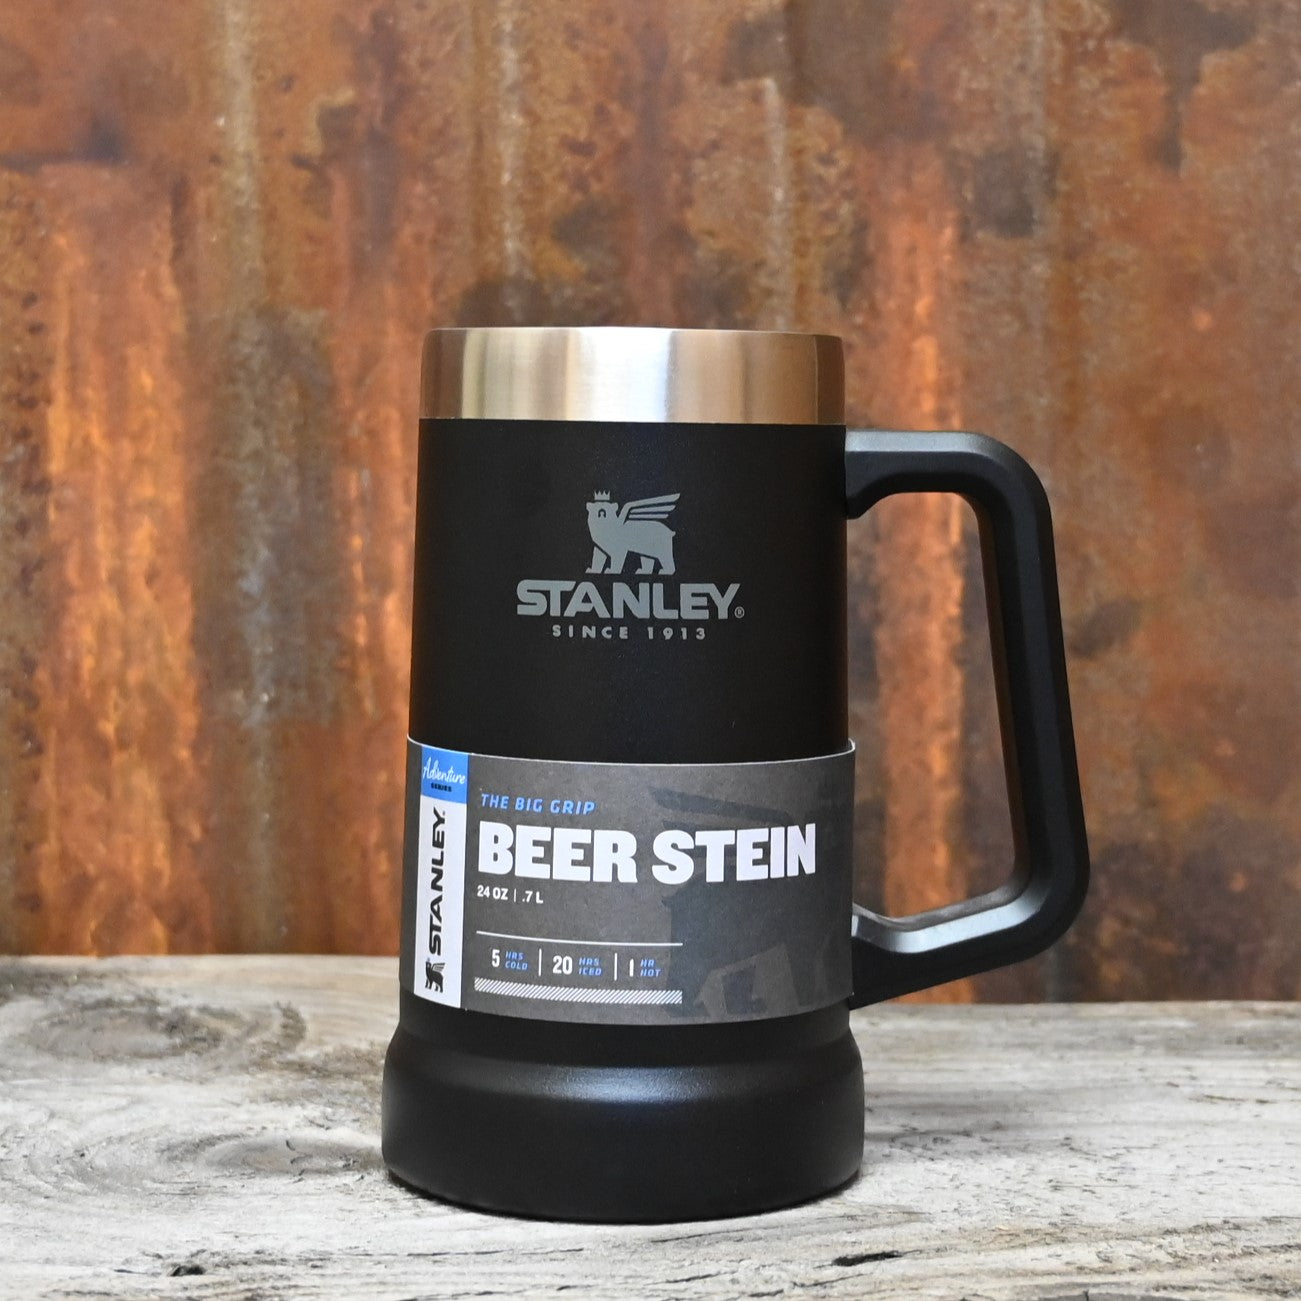 Stanley Adventure Big Grip Beer Stein in Matte Black view of beer stein